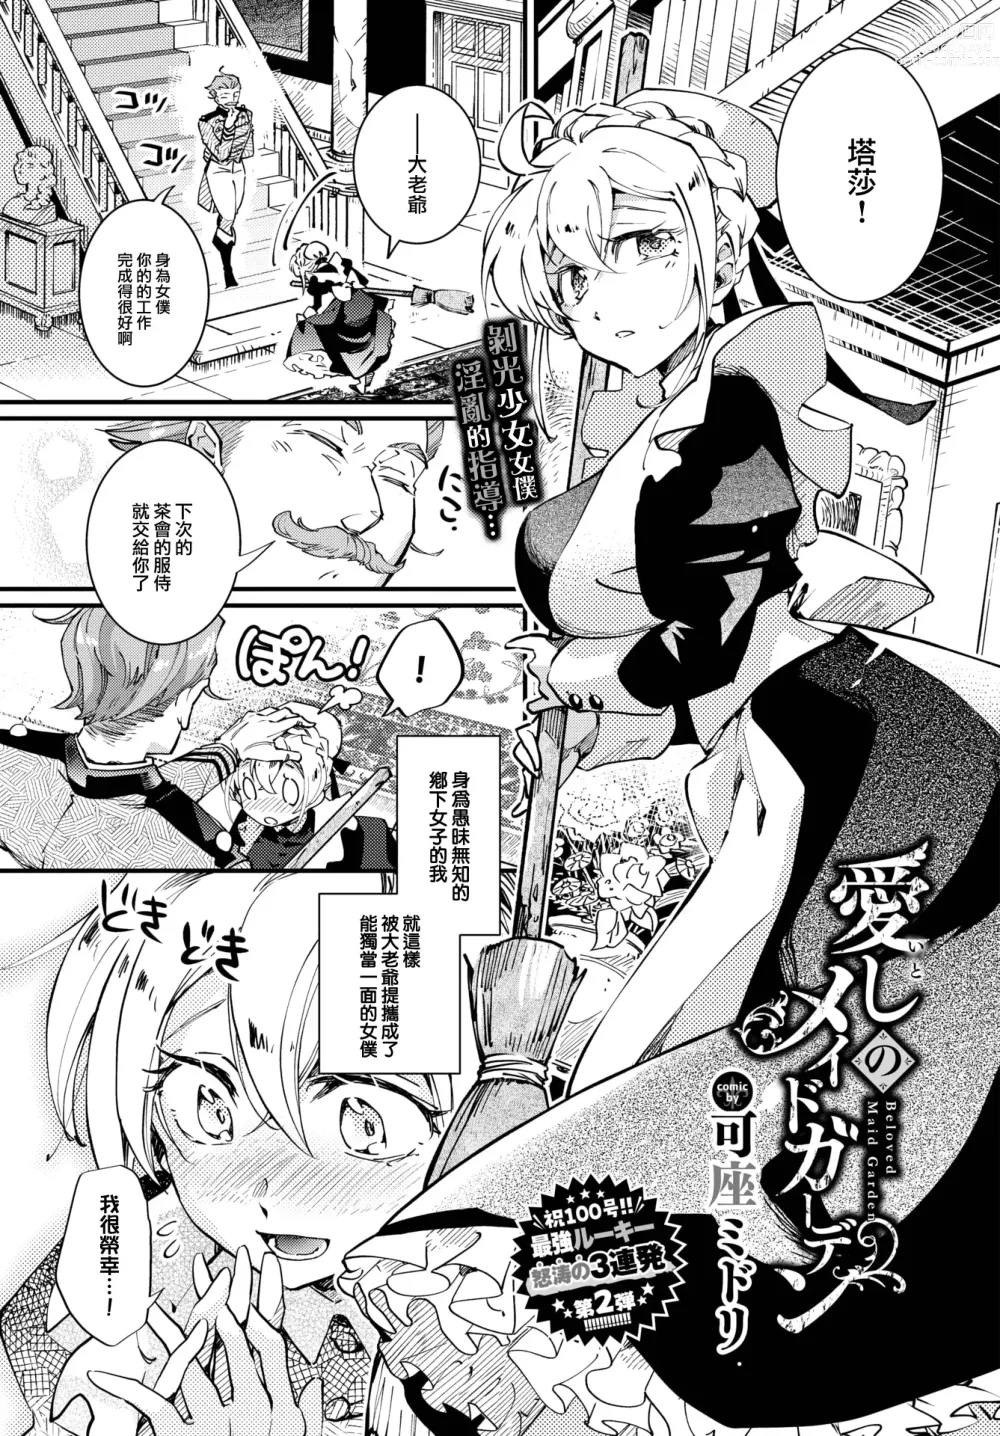 Page 2 of manga Beloved Maid Garden